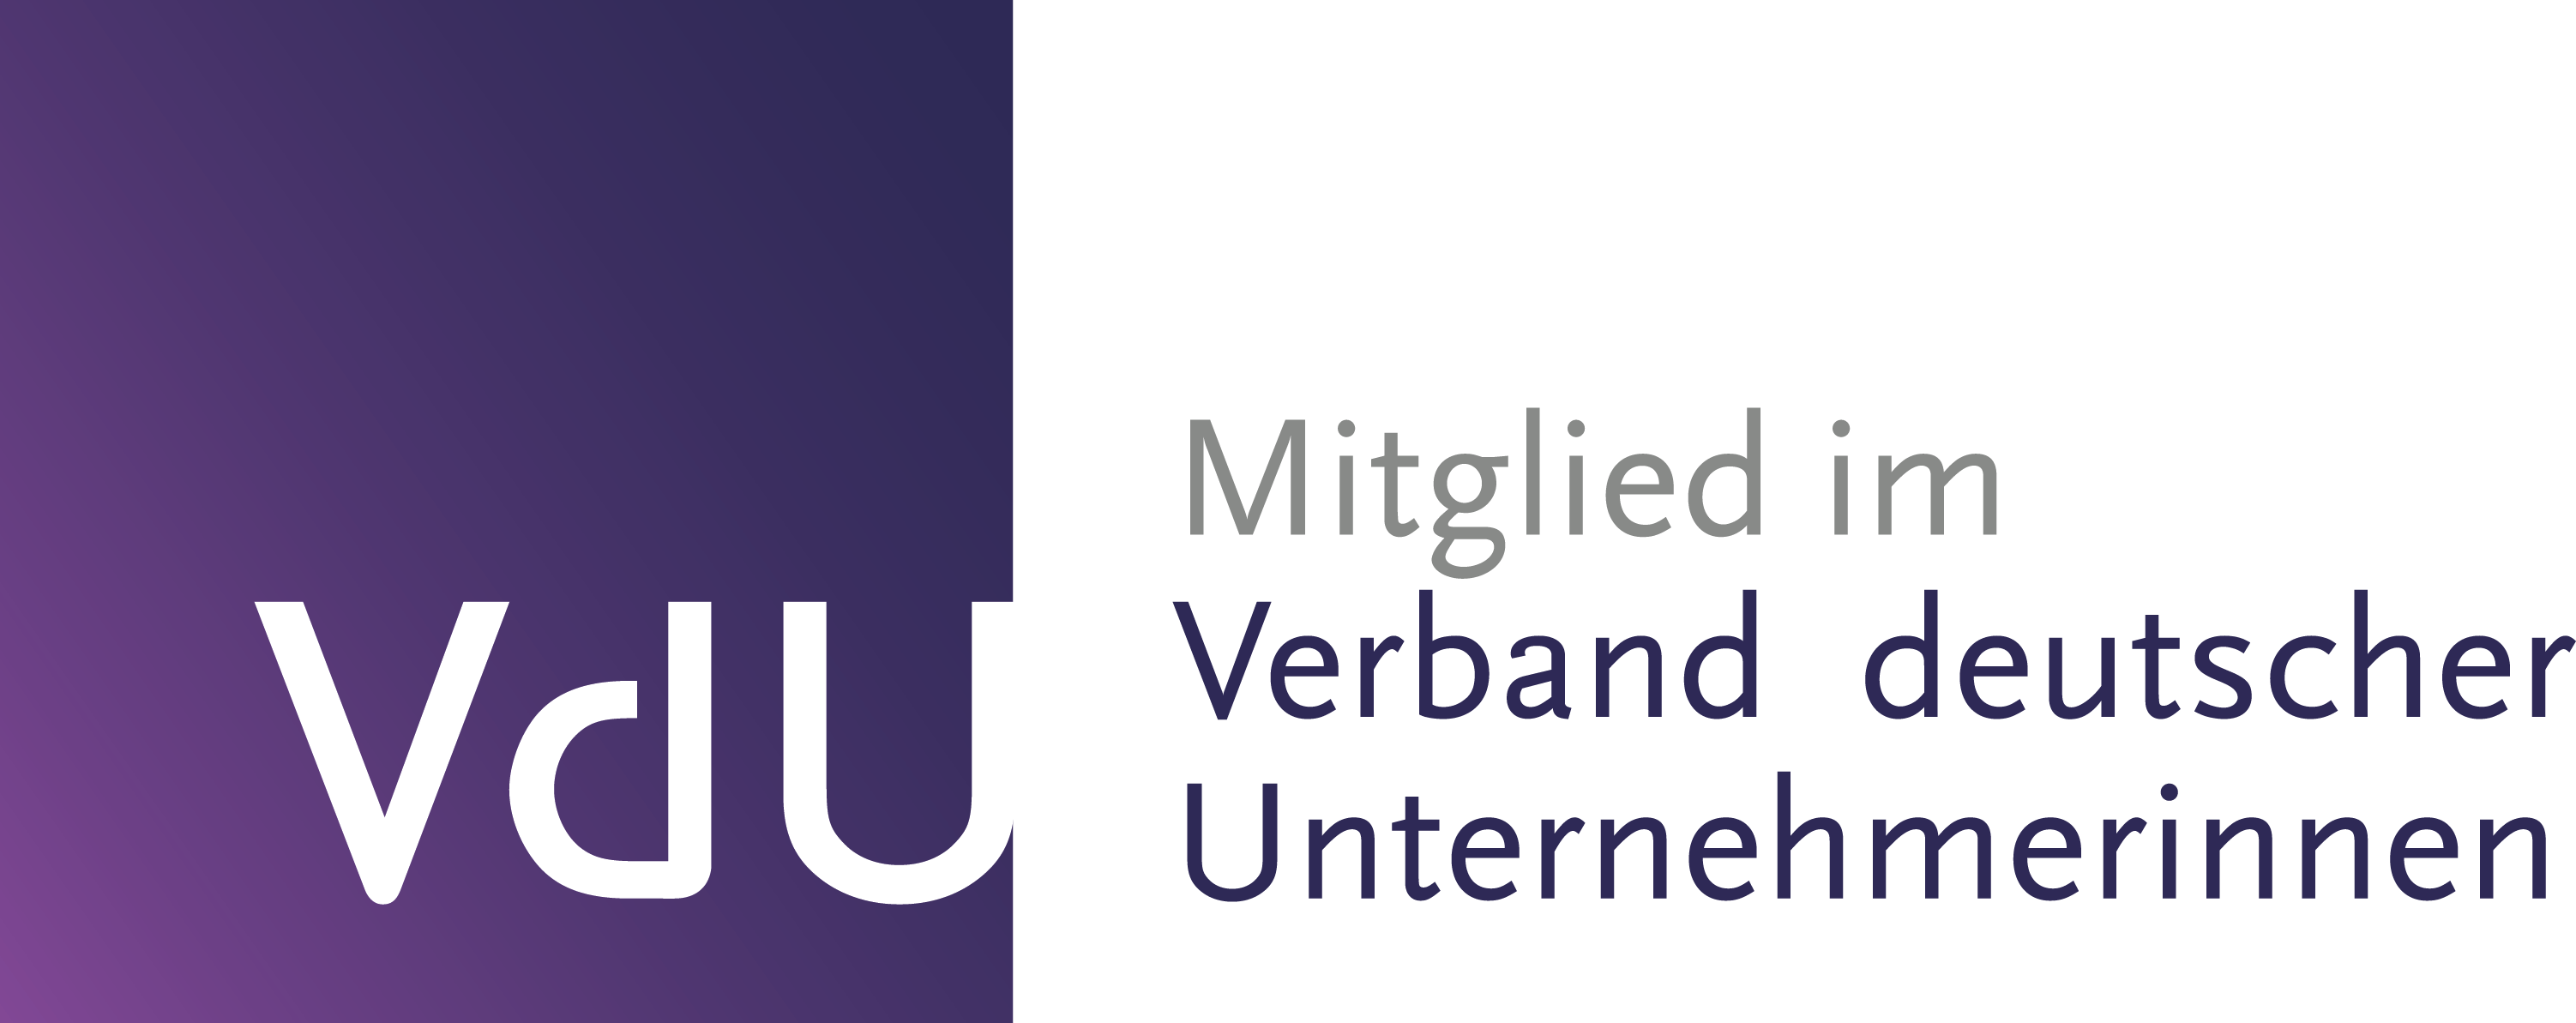 VdU-Logo_Mitglied_im_VdU.png